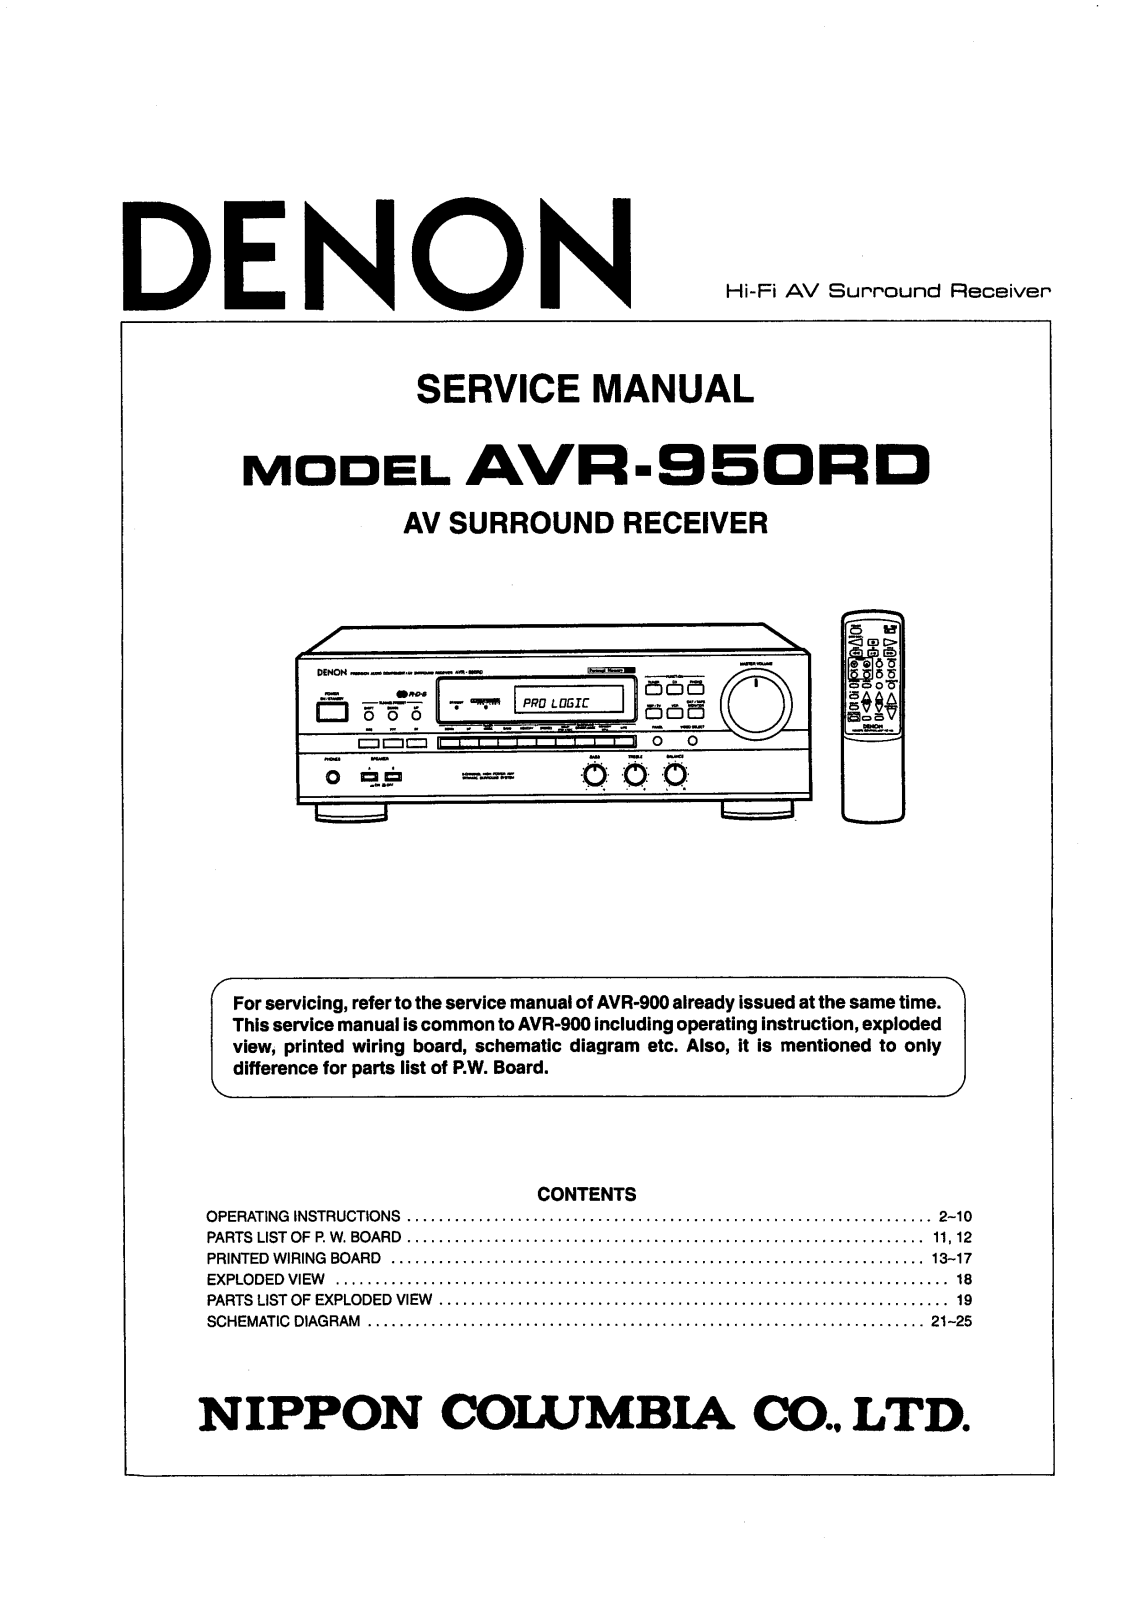 Denon AVR-950RD Service Manual